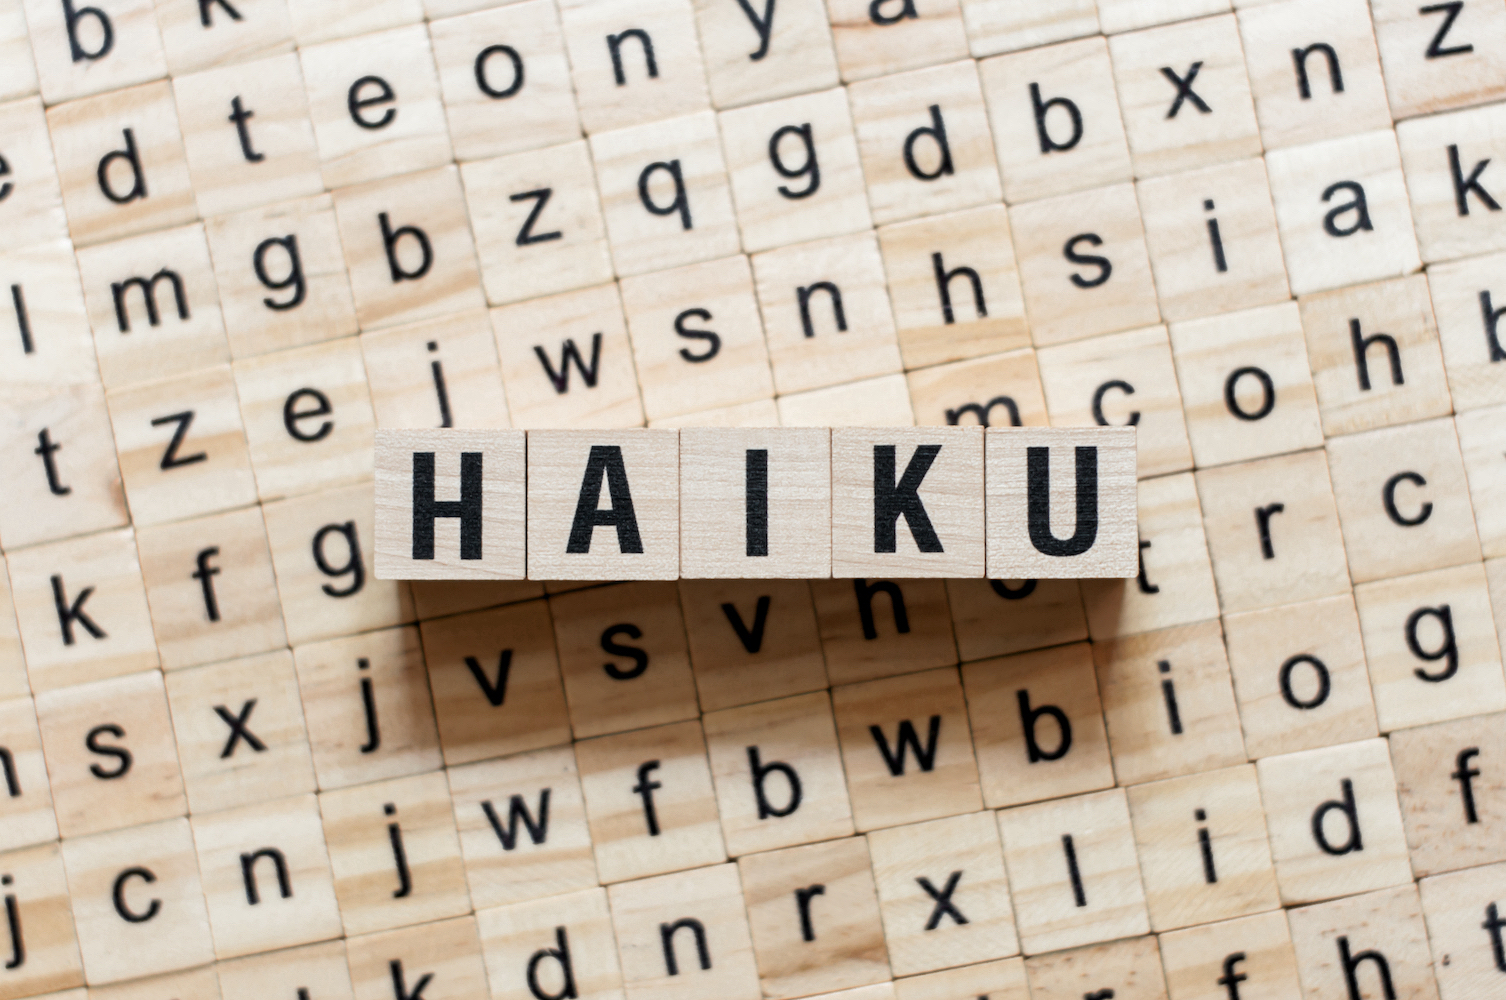 haiku examples